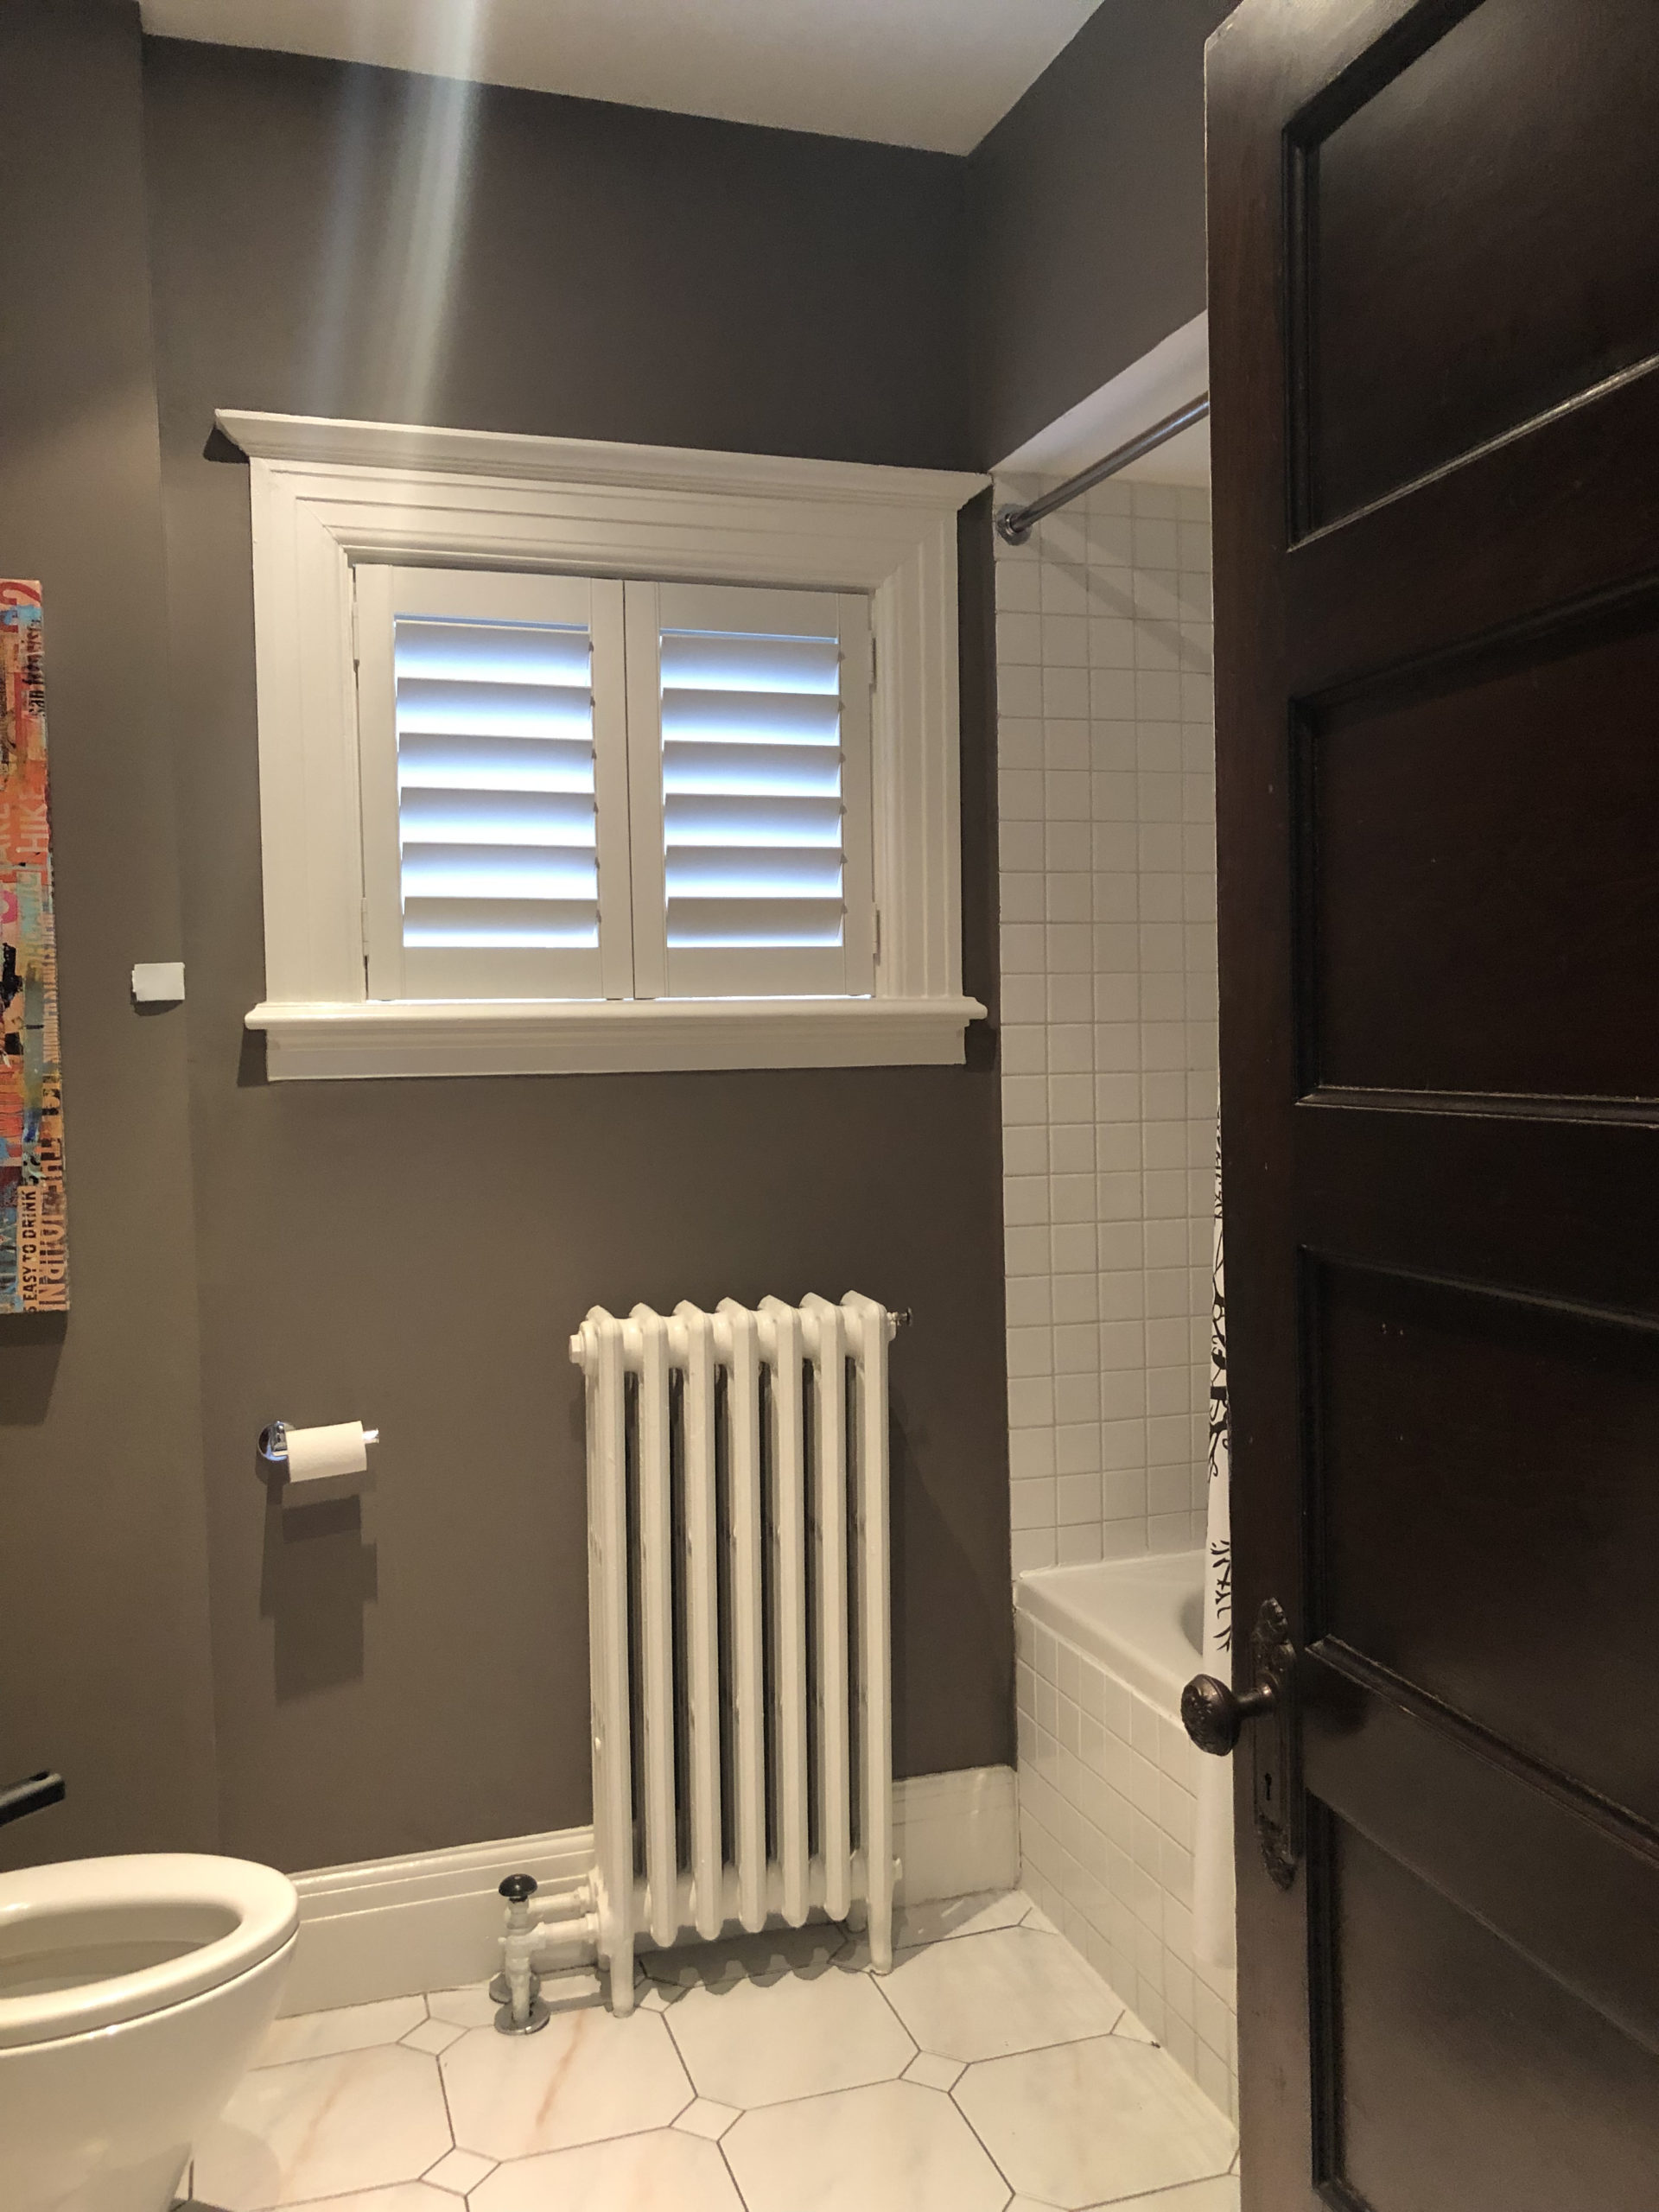 before photo of bathroom, dark room with tub and radiator under window